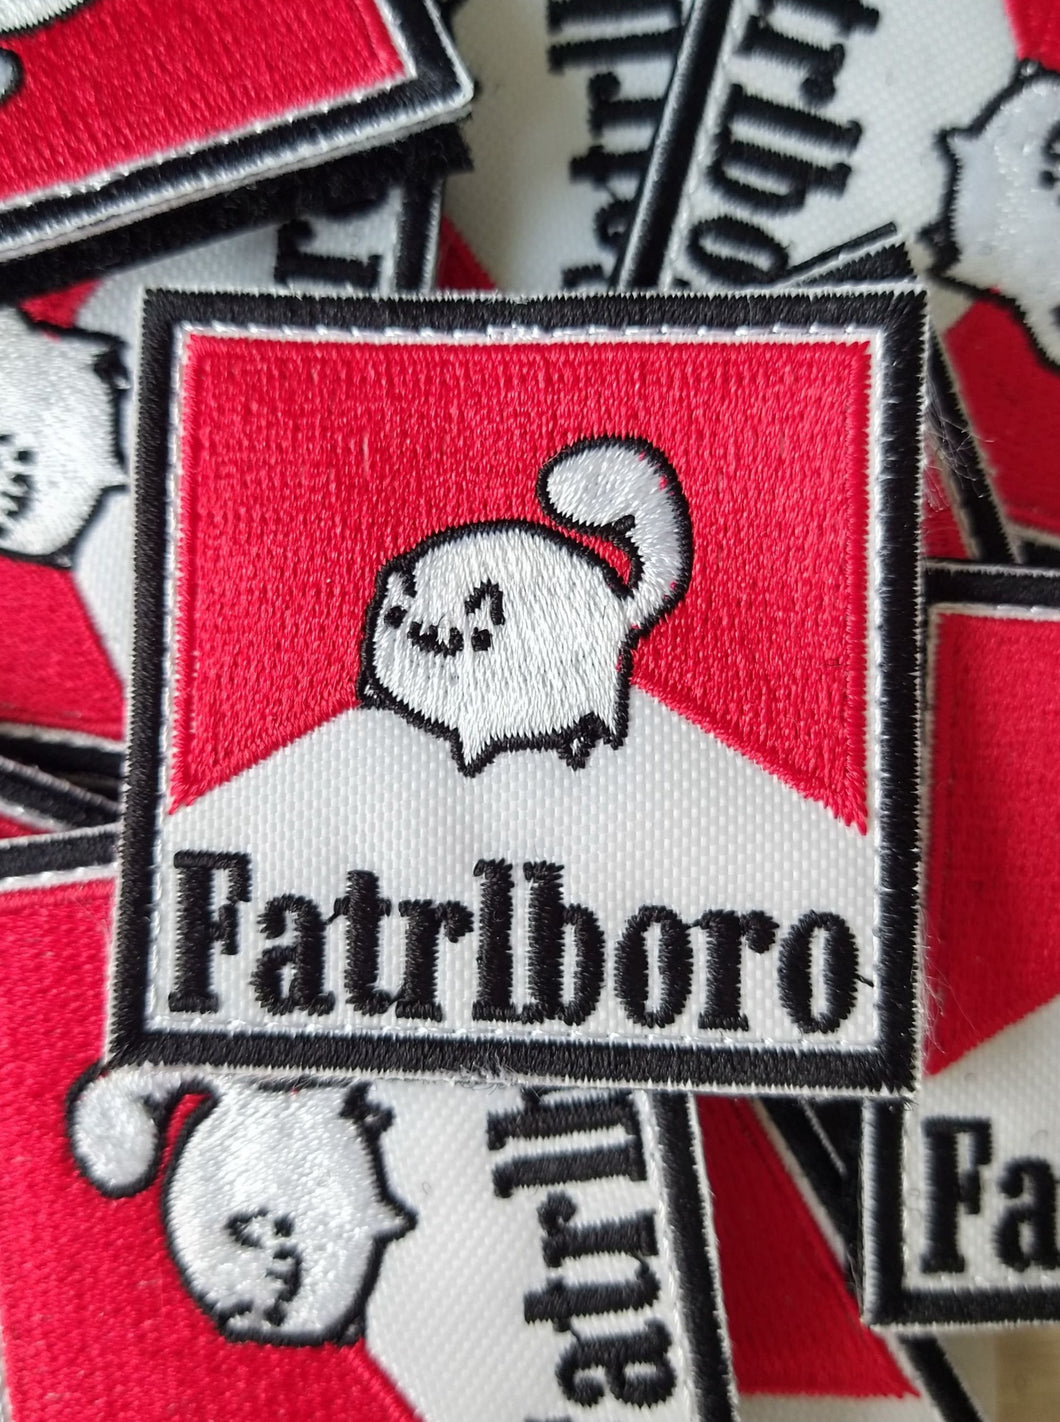 Fatrlboro™ Patch